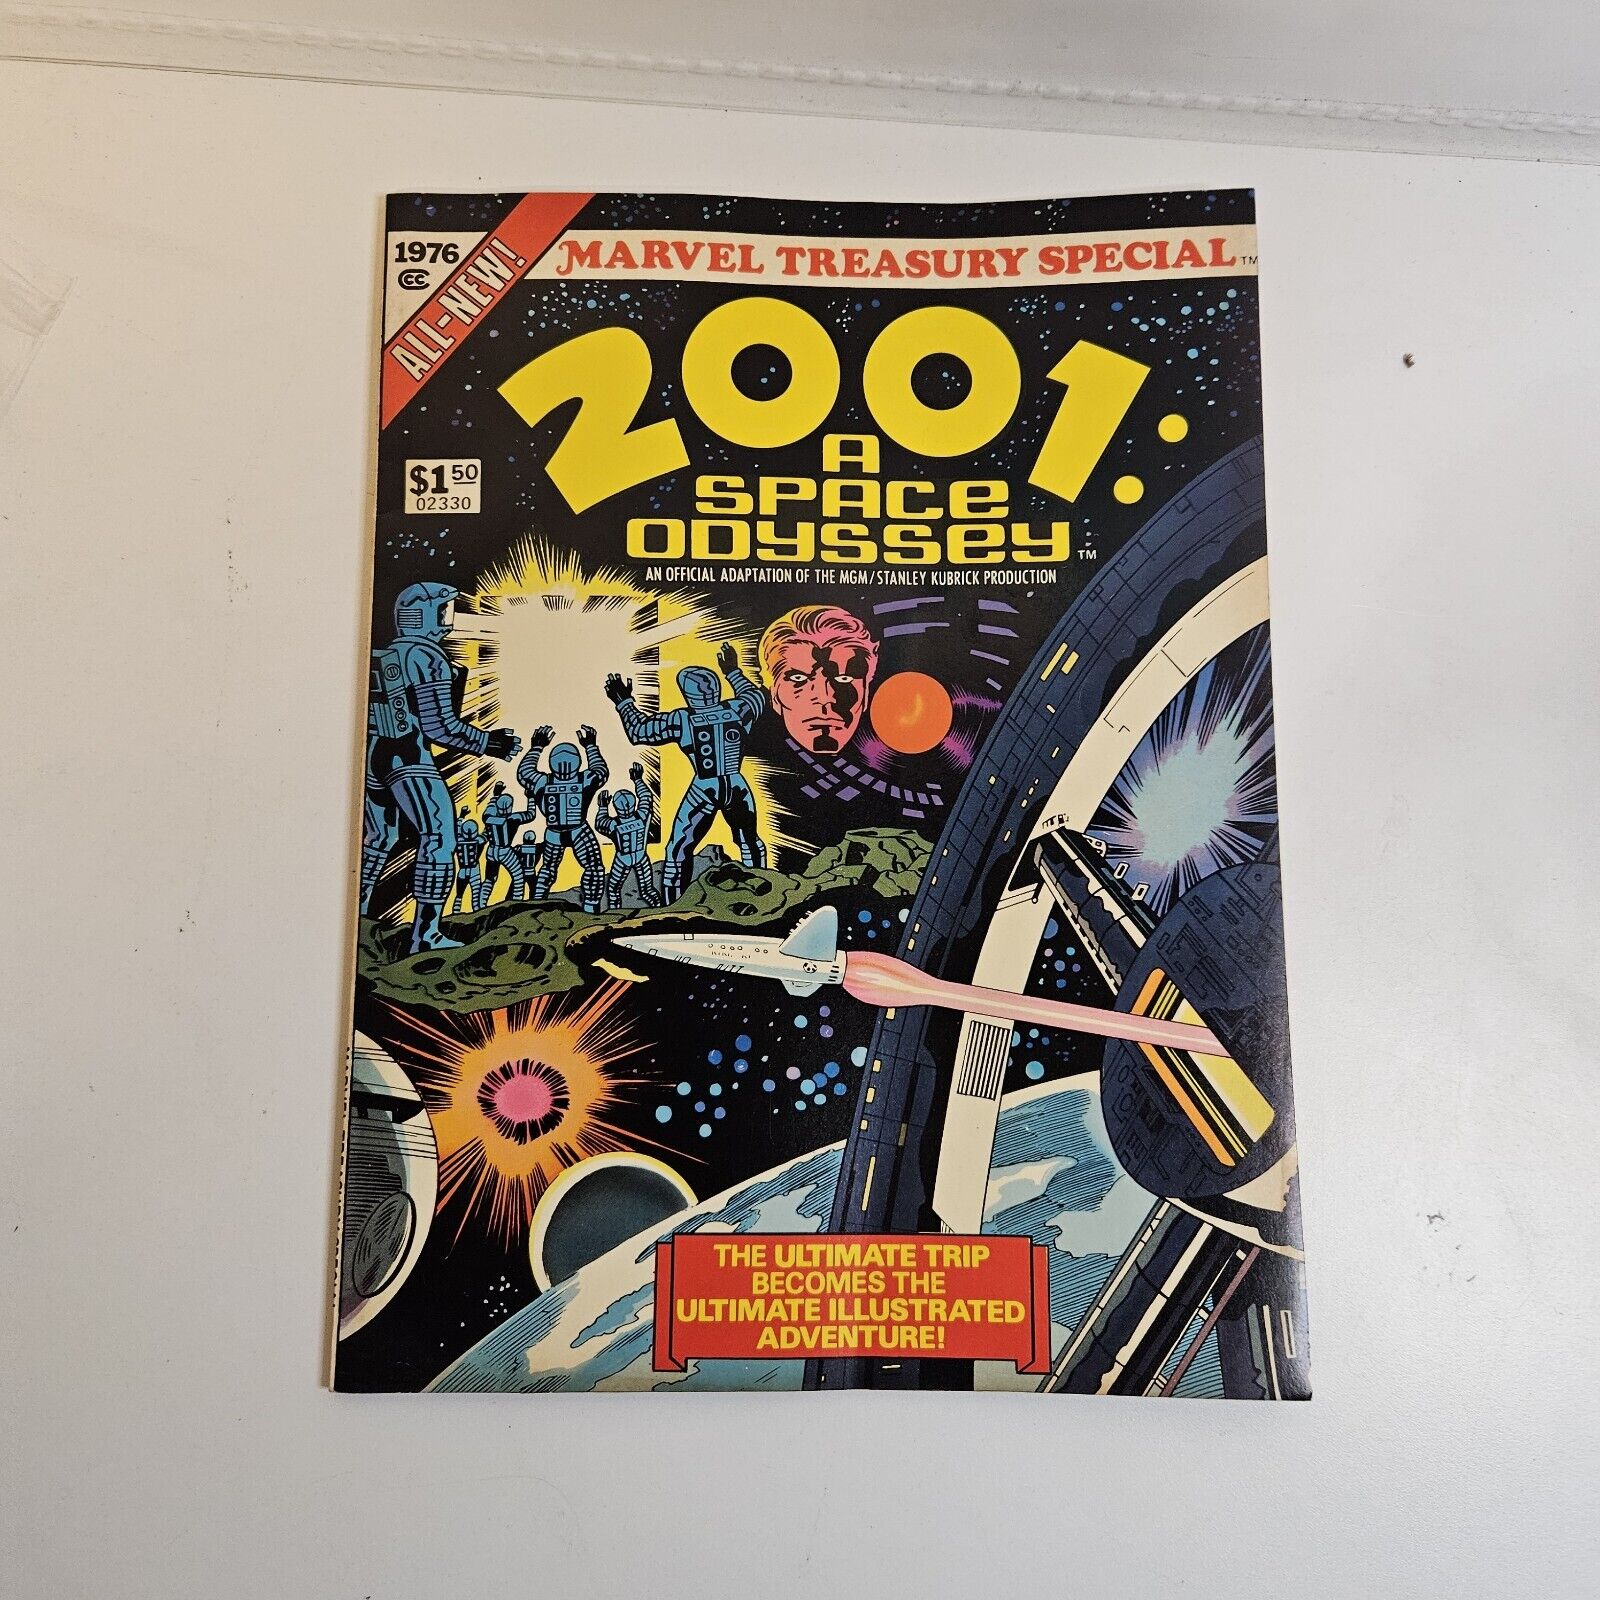 1976 2001: A SPACE ODYSSEY #1 Marvel Treasury Edition WP Jack Kirby NM